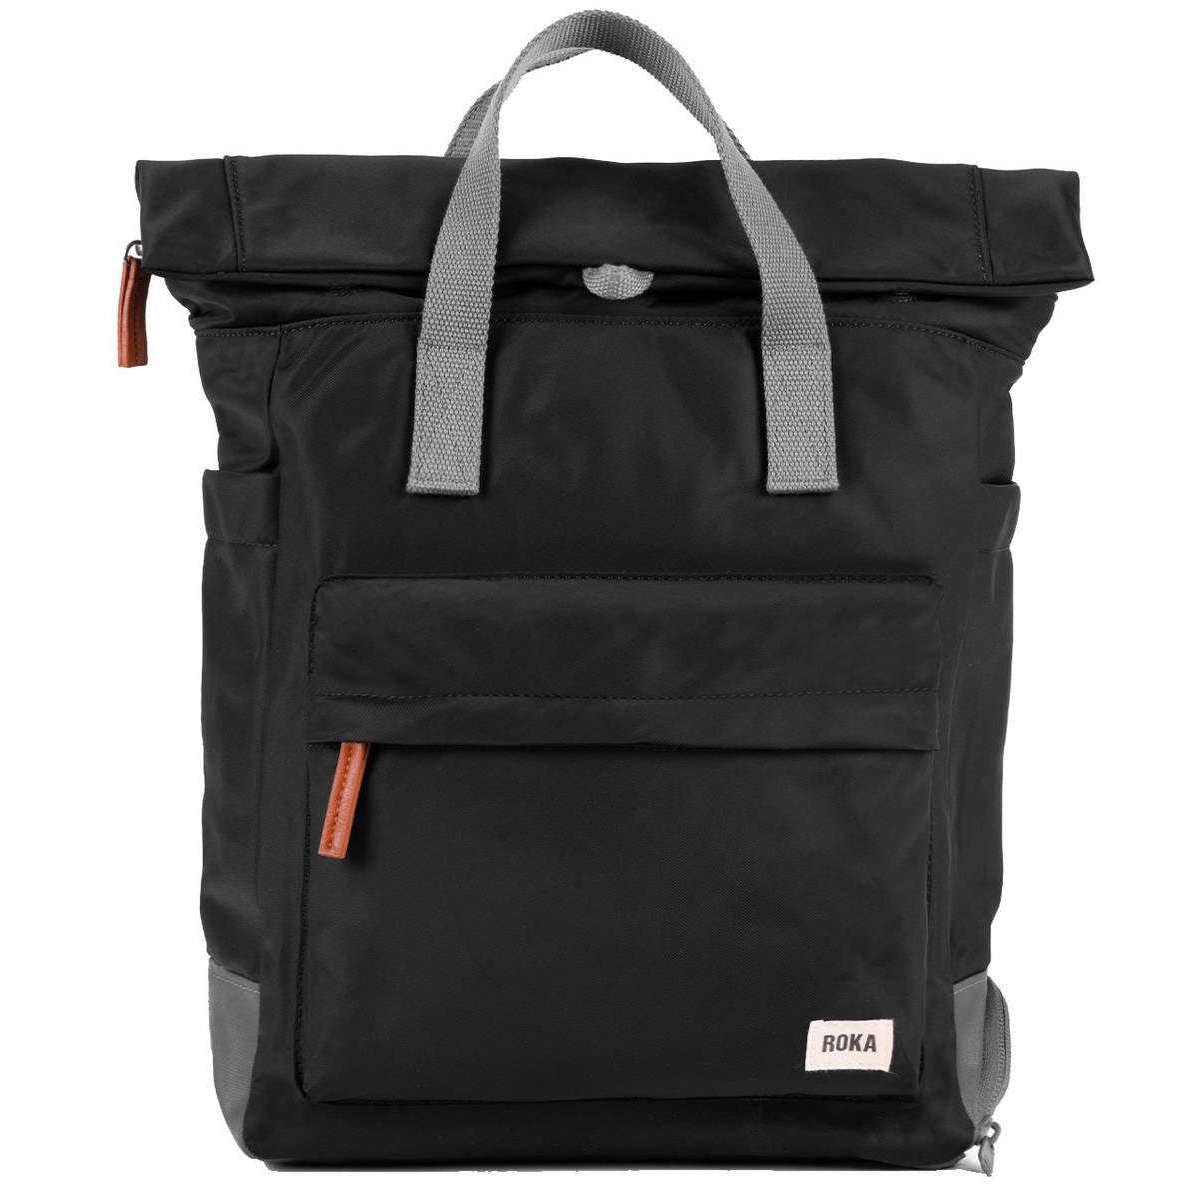 Roka Bayswater B Medium Sustainable Nylon Backpack - Black